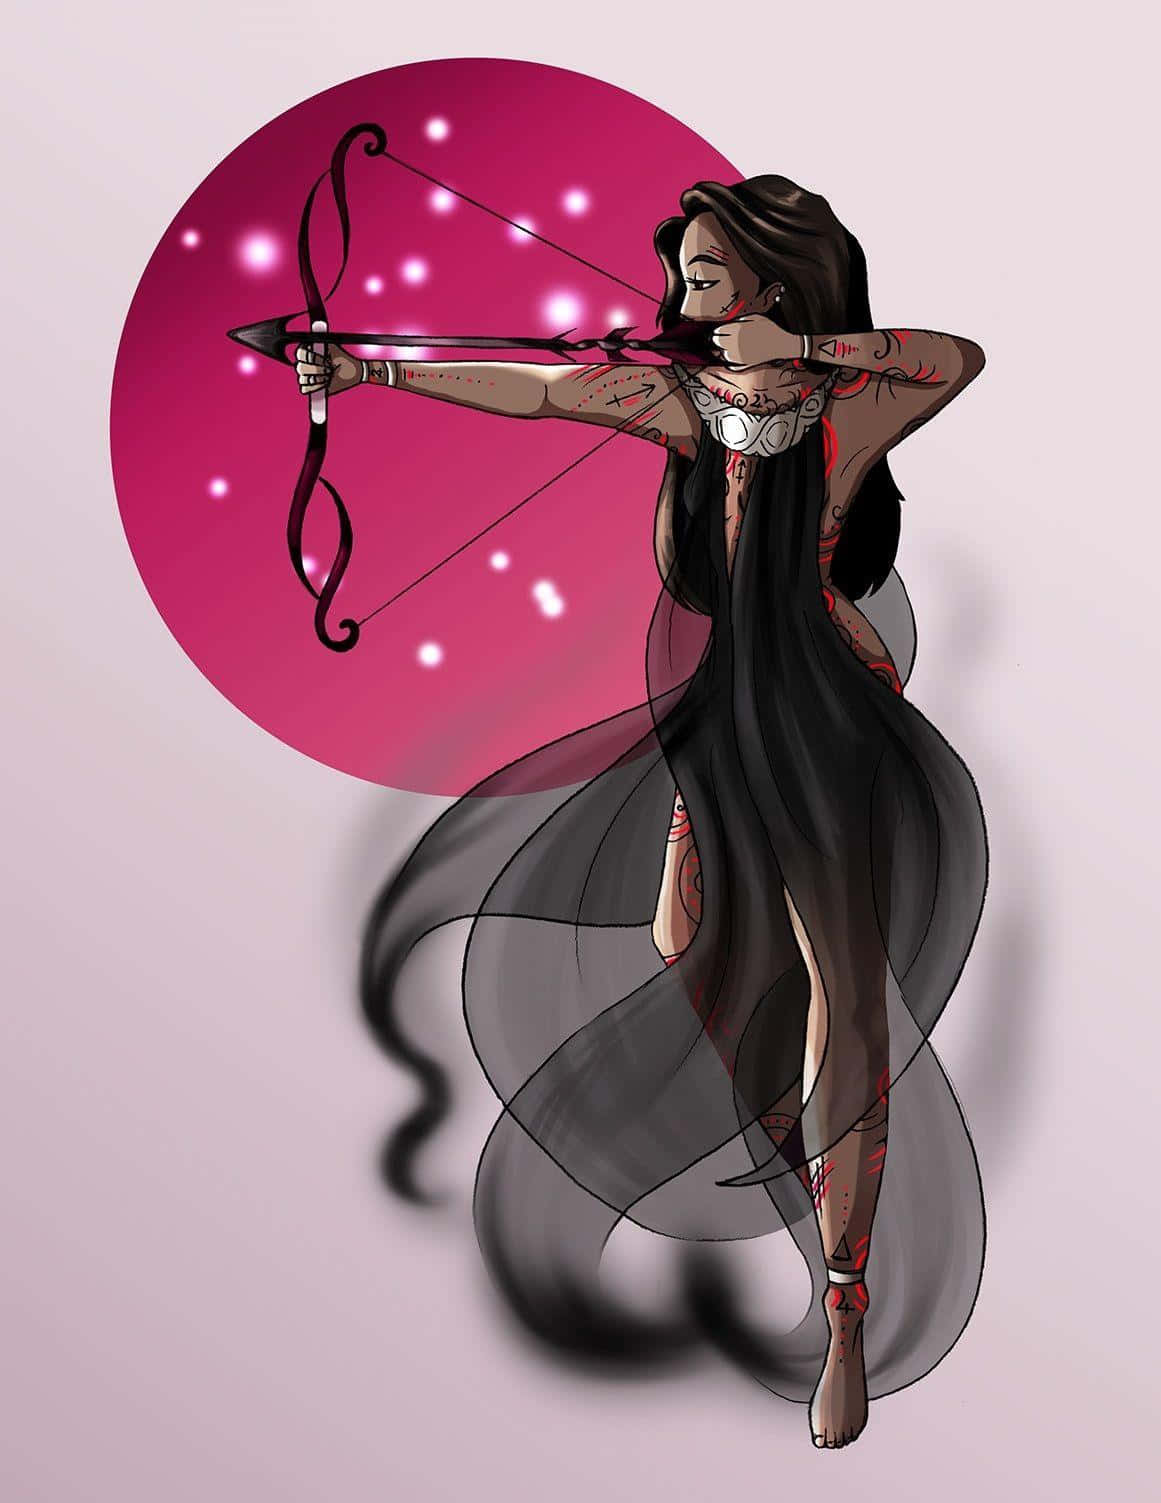 Adorable Sagittarius Woman Demonstrating Her Archery Skills Wallpaper